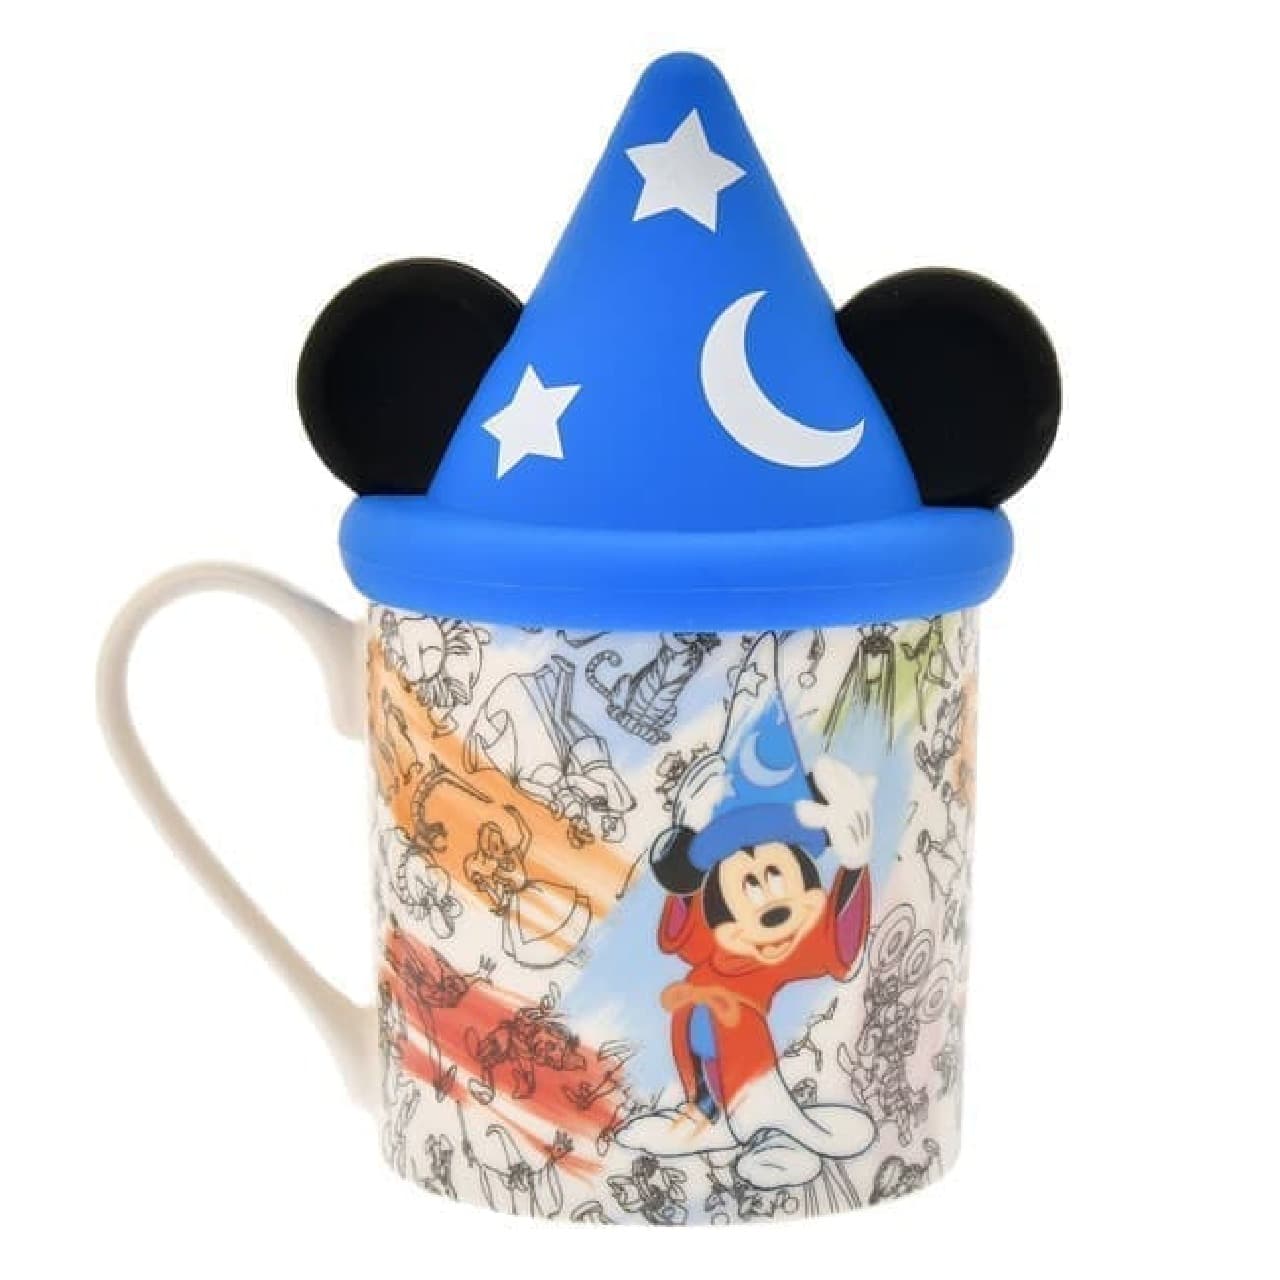 Disney movie "Fantasia" 80th anniversary! Mickey's new miscellaneous goods at the Disney Store